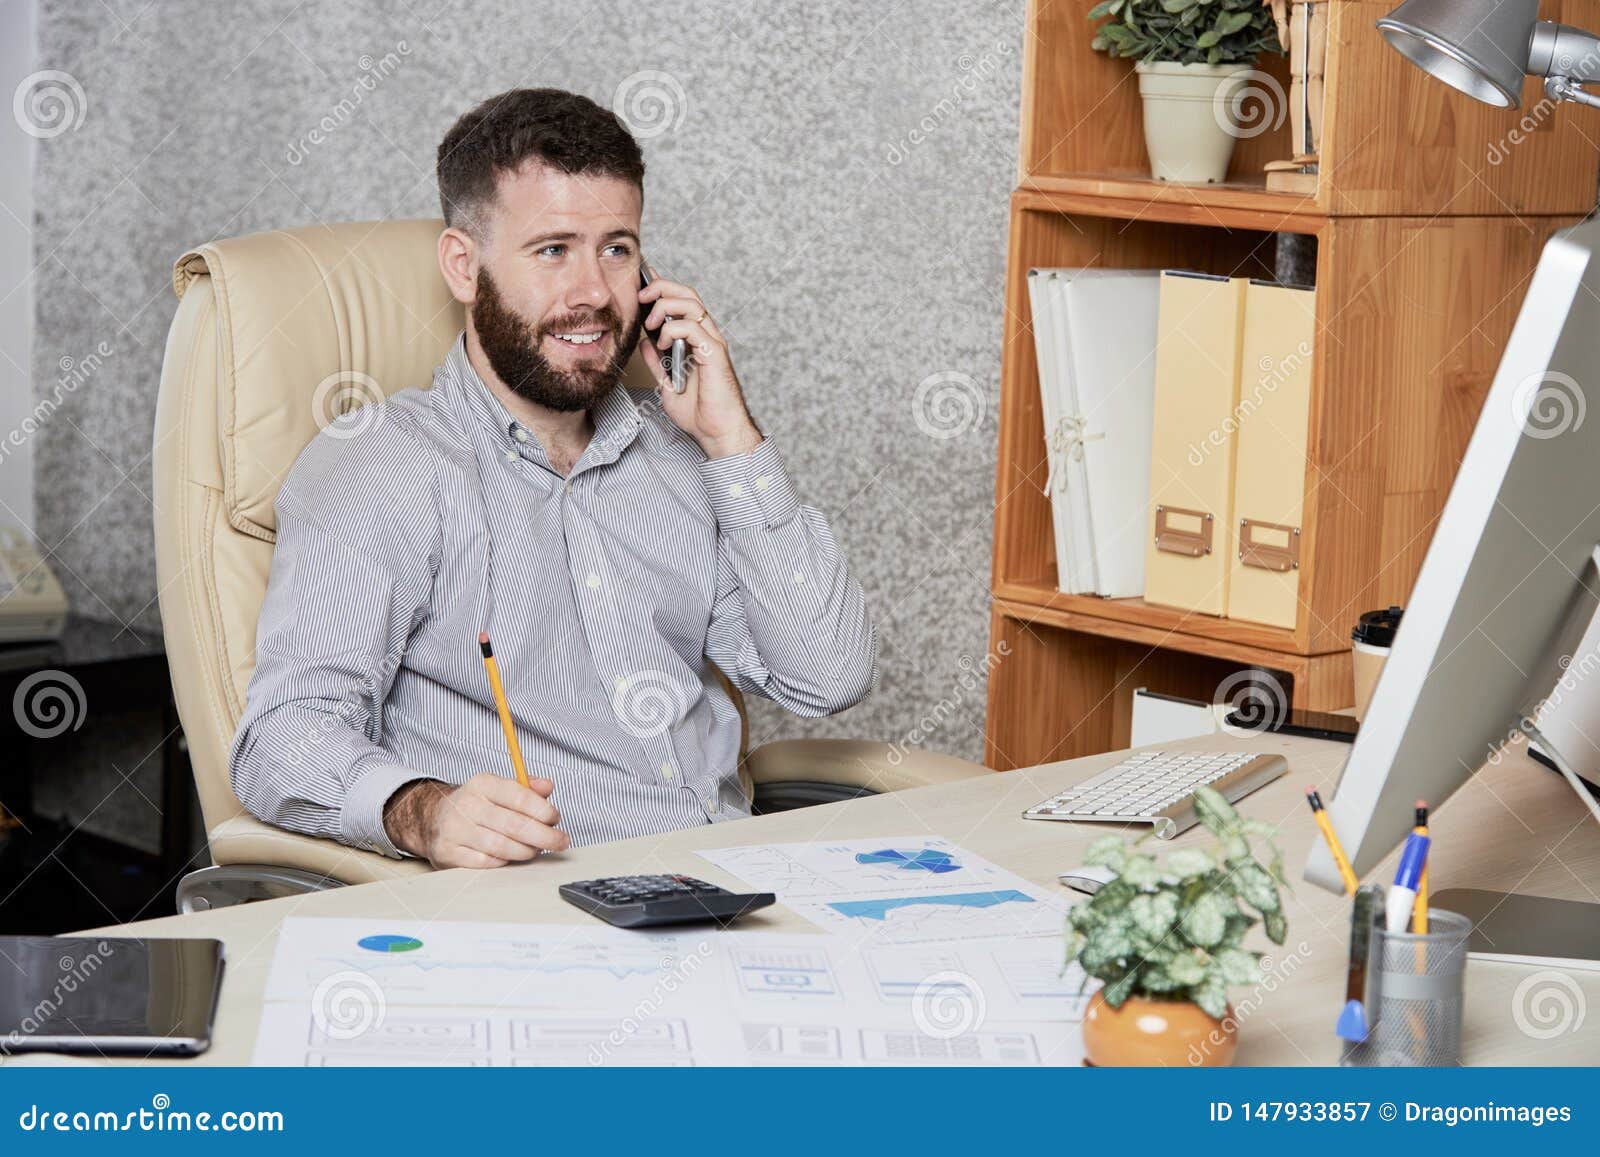 Financial Advisor Working On Mobile Phone Stock Image Image Of